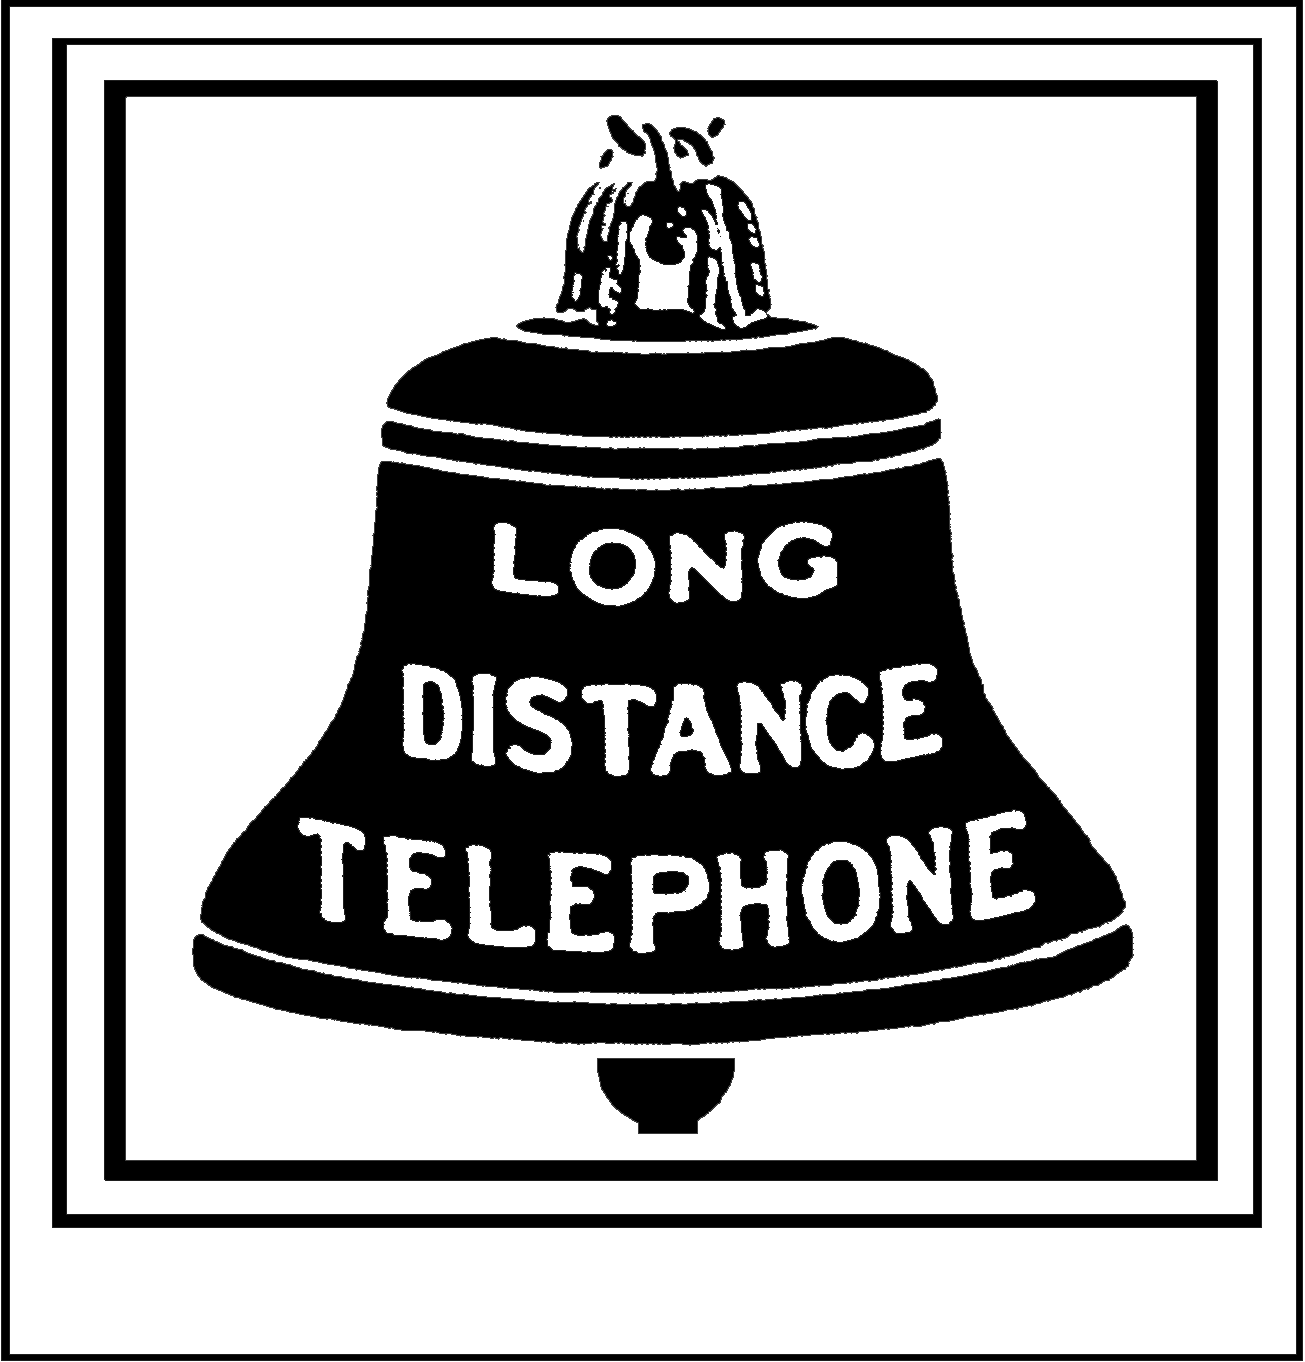 Telephone Company Logo - Bell Telephone Company | Logopedia | FANDOM powered by Wikia